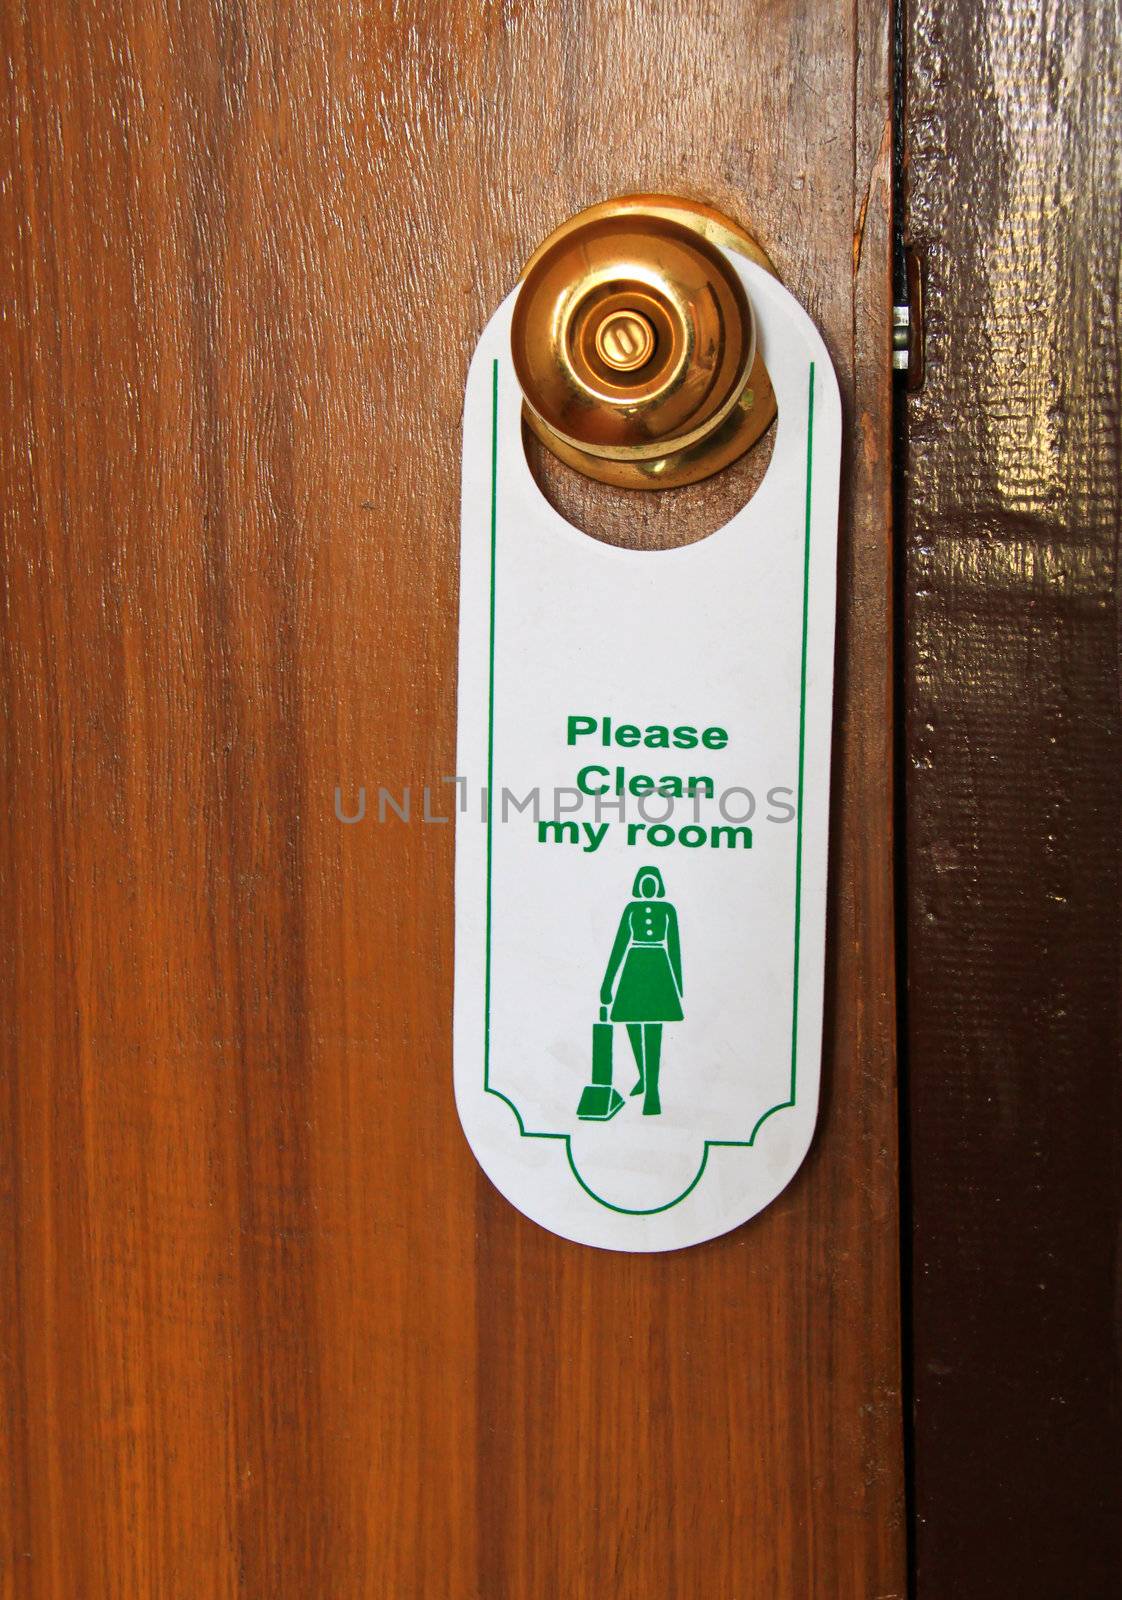 please clean my room hotel tag hanging on door knob